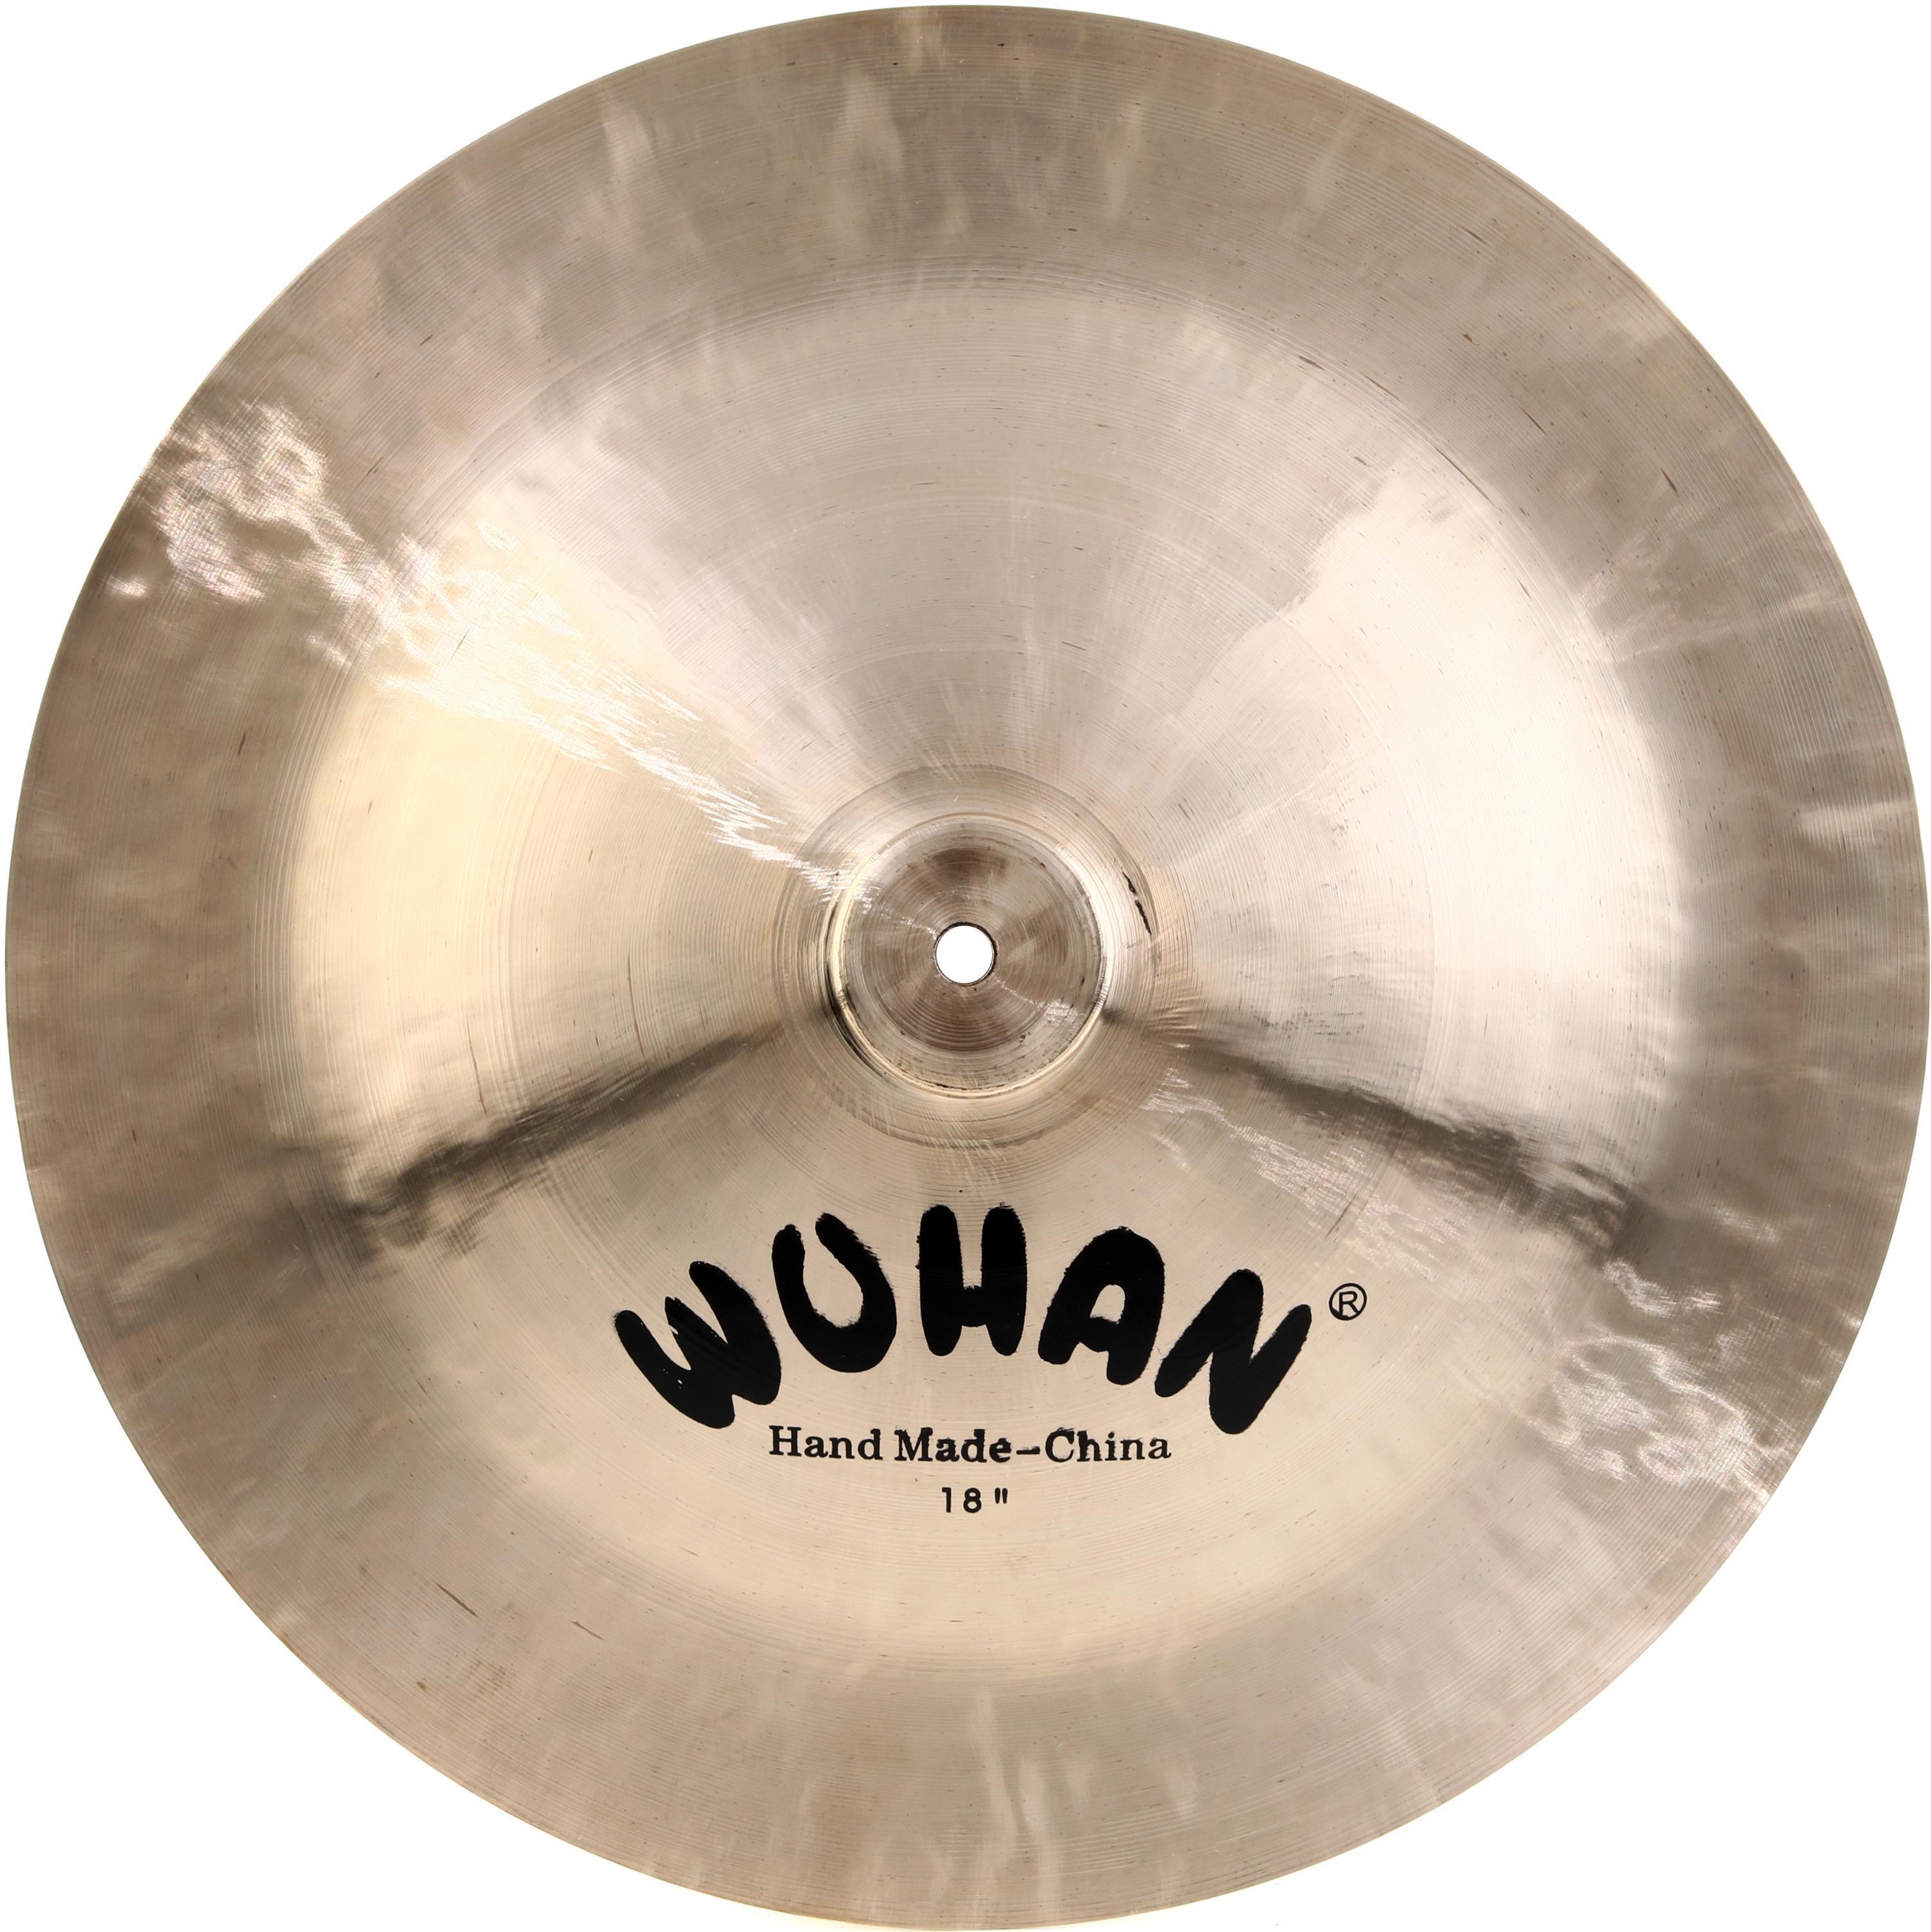 Bundled Item: Wuhan 18-inch China Cymbal